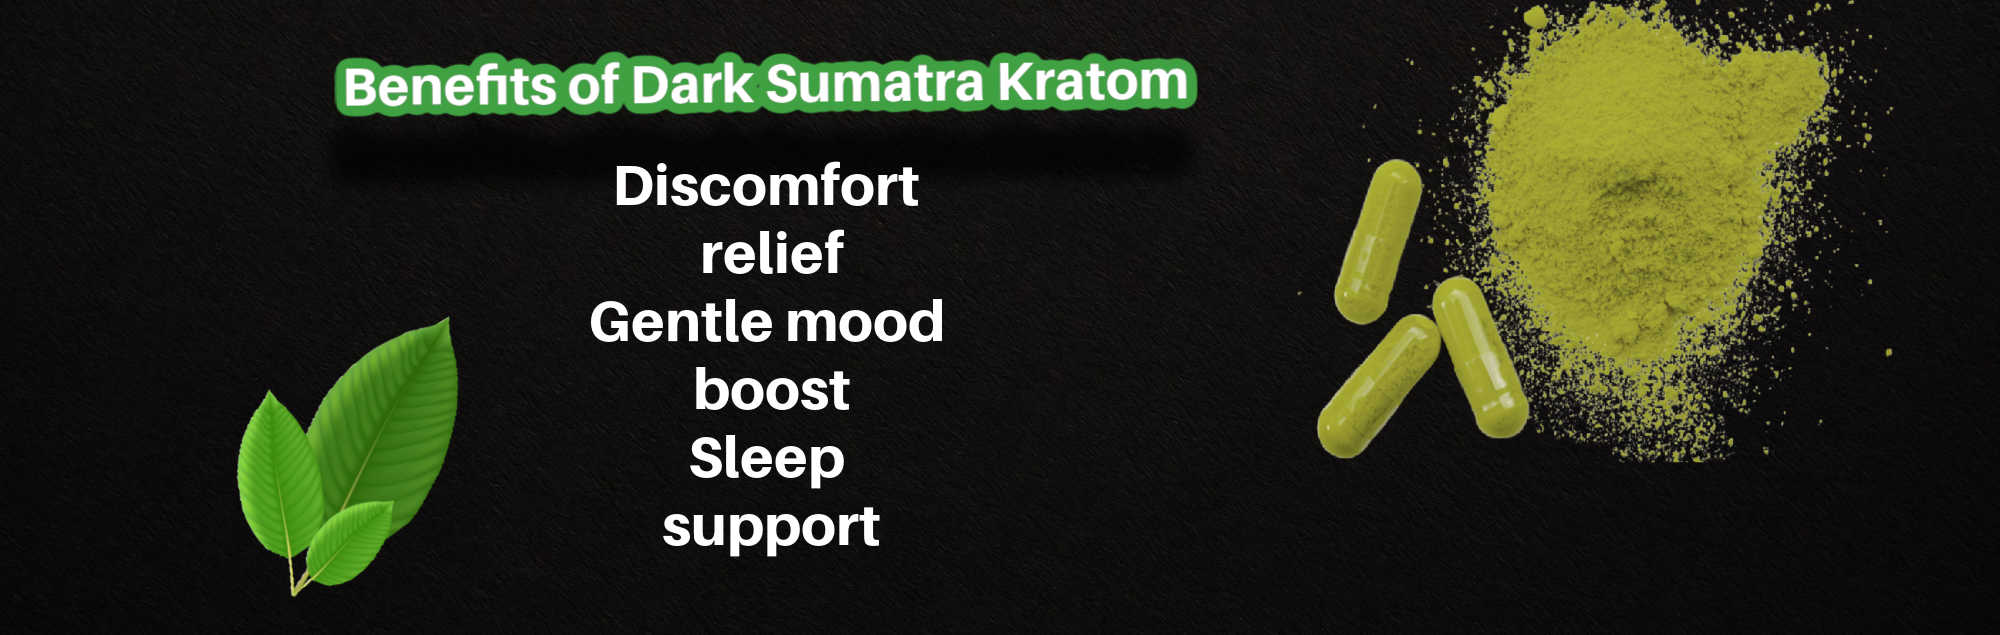 image of dark sumatra kratom benefits